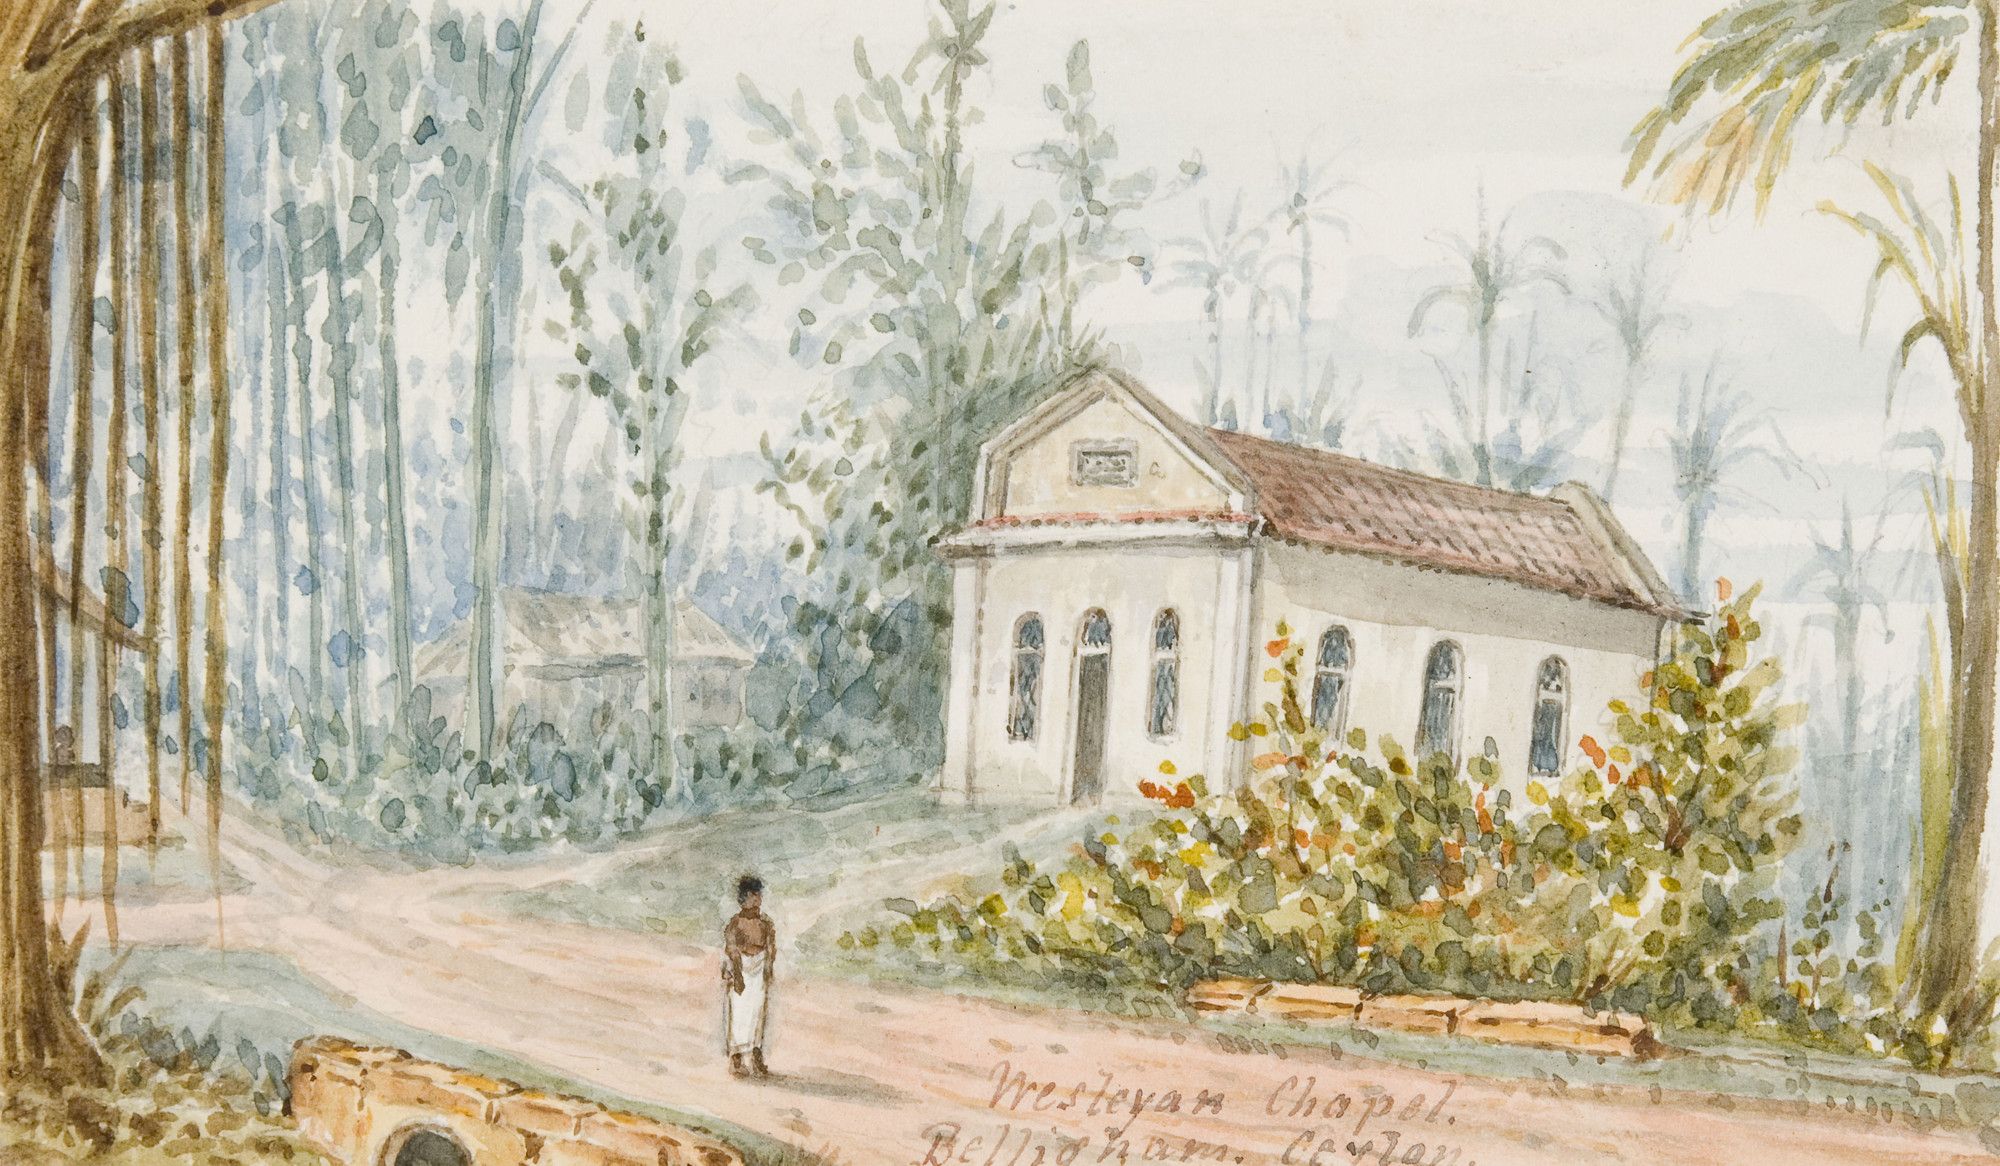 Wesleyan Chapel, Belligham, Ceylon